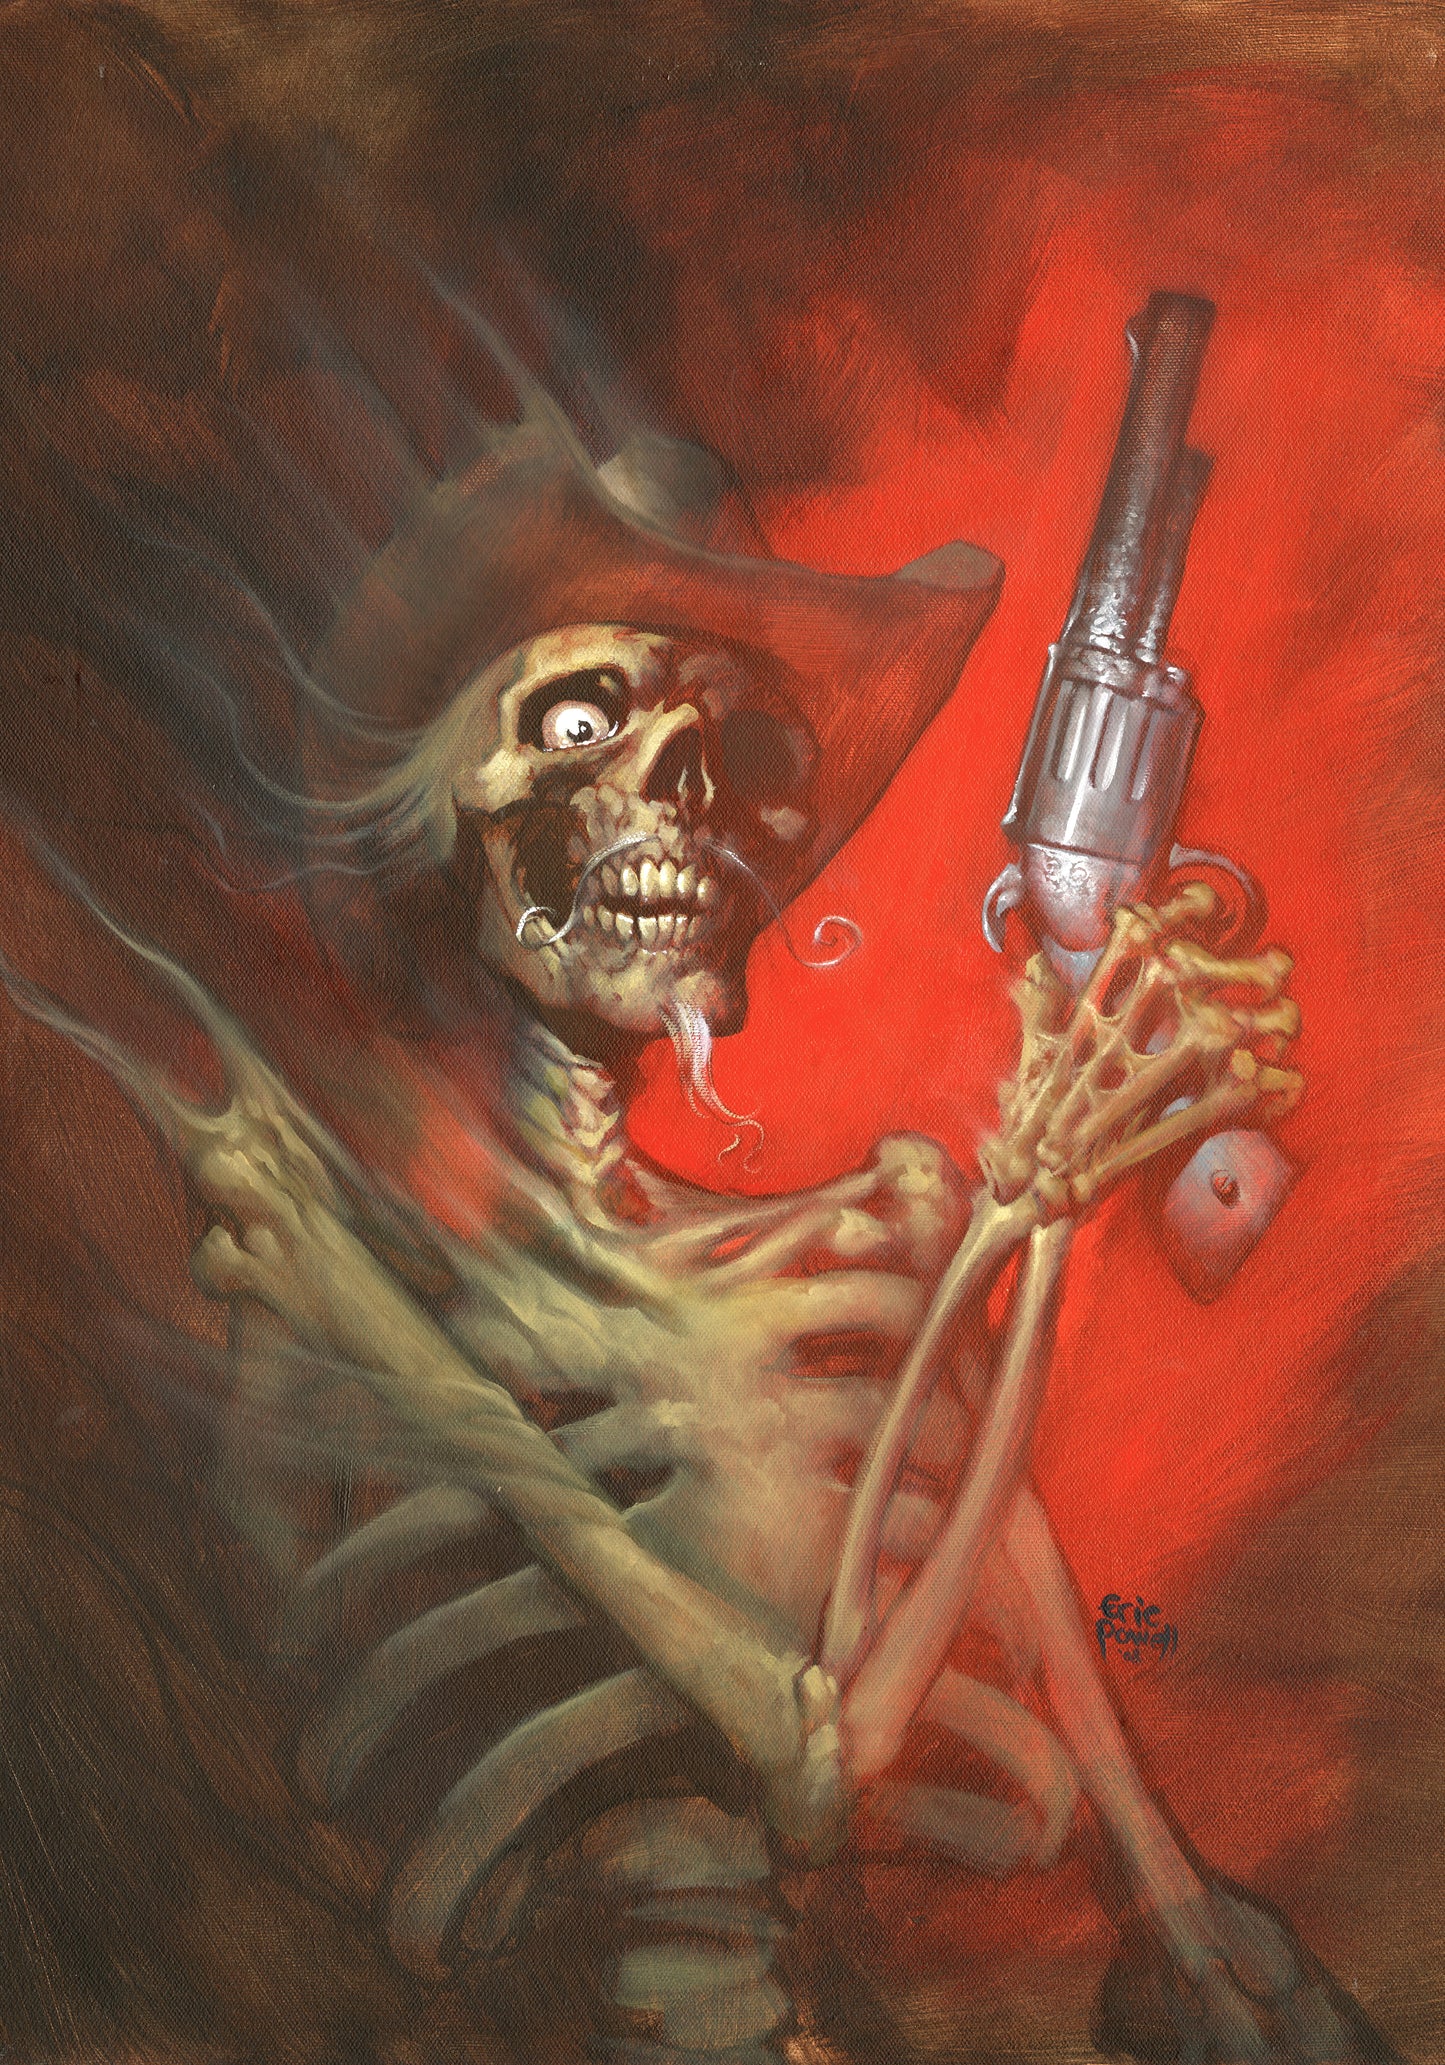 Ghoultown: Skeleton Cowboys album cover painting (2008)